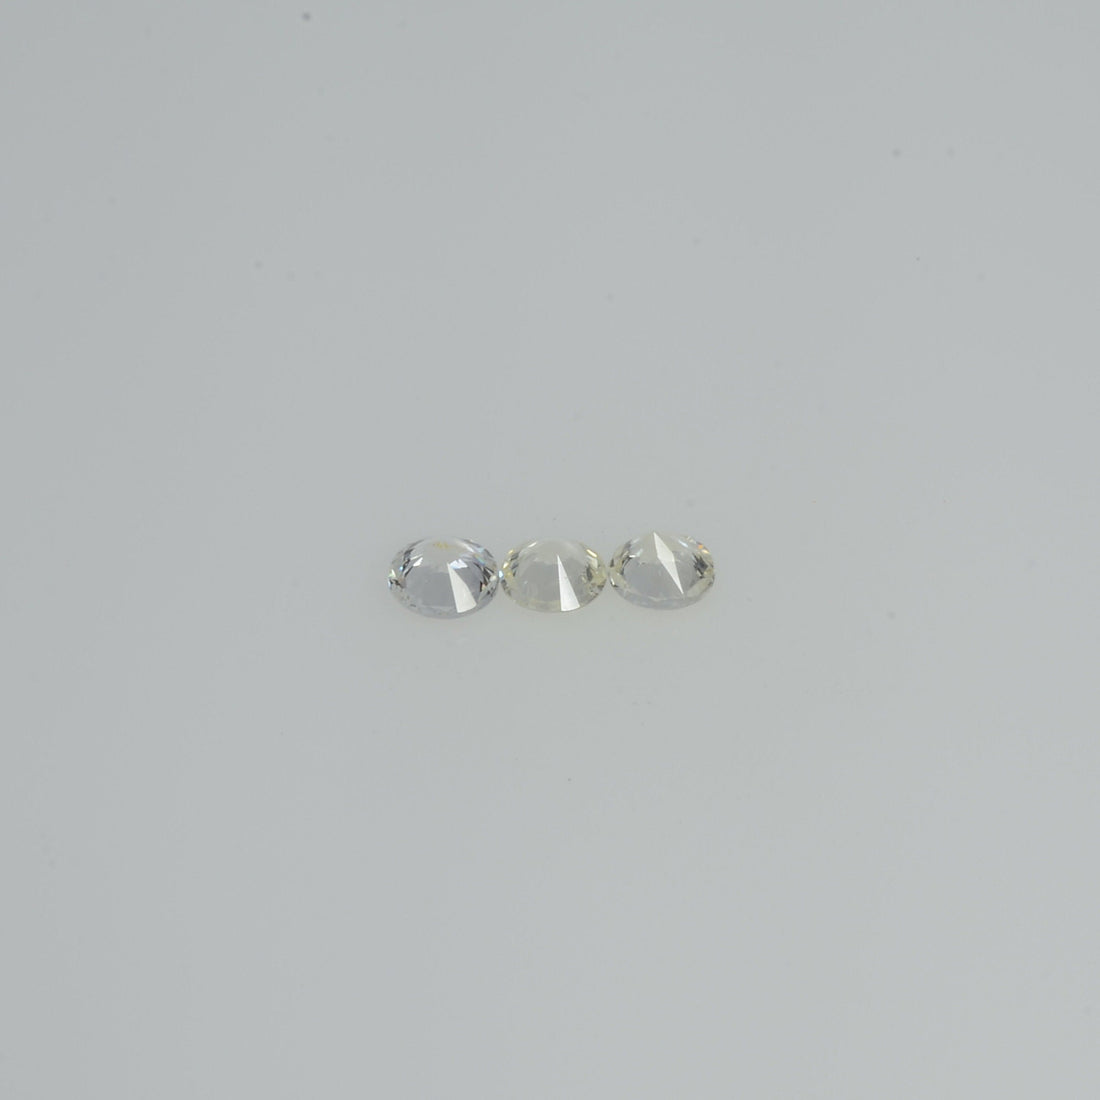 3.00 mm Natural Yellowish White Sapphire Loose Cleanish Quality  Gemstone Round Diamond Cut